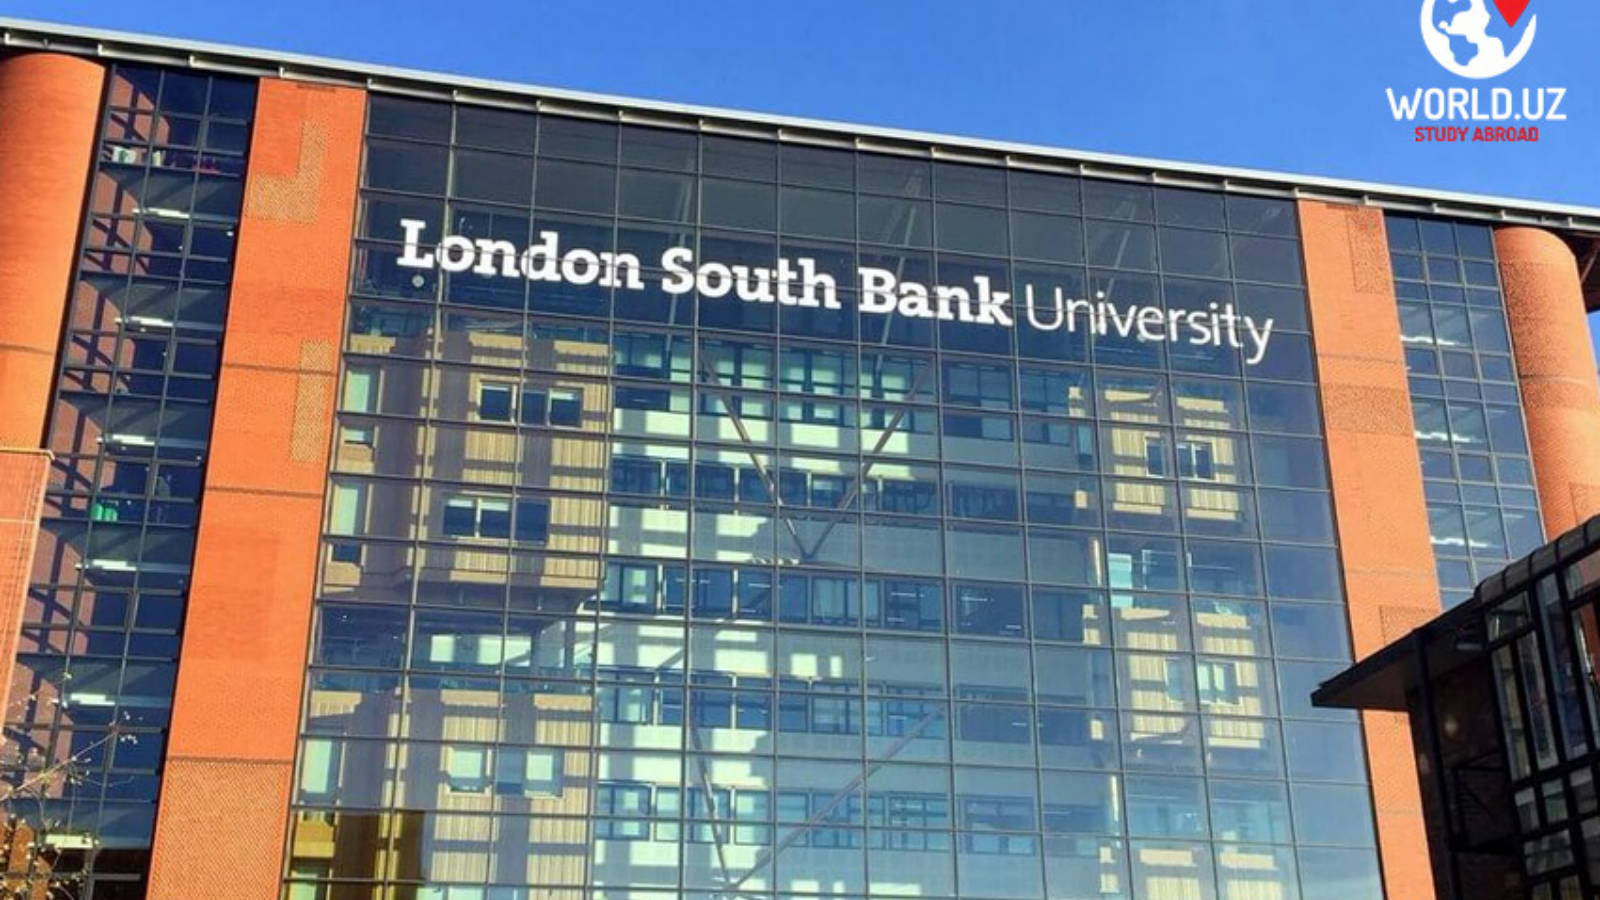 Banking university. London South Bank University. London South Bank University старое здание.